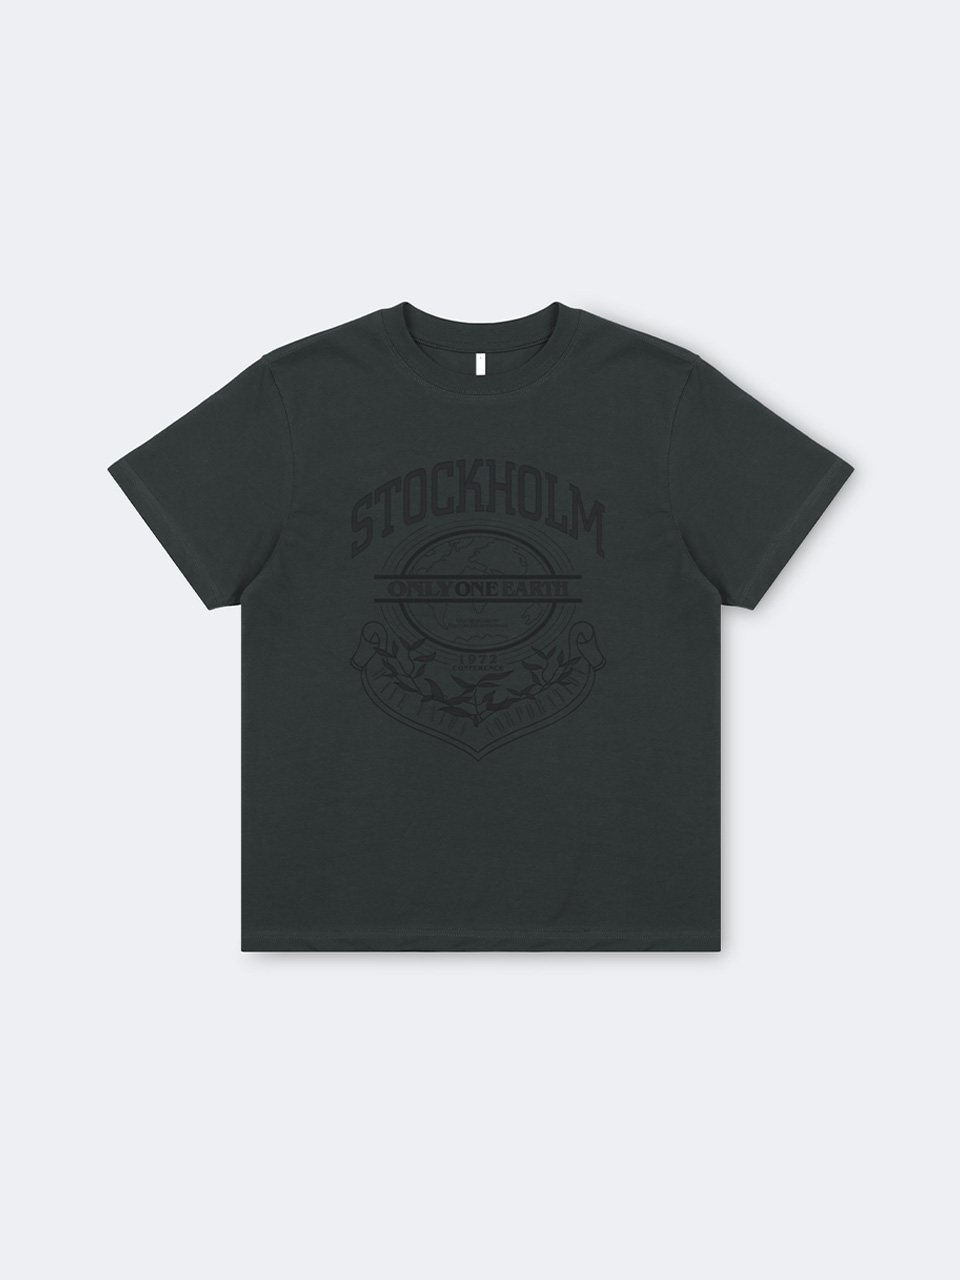 Stockholm T-shirt charcoal